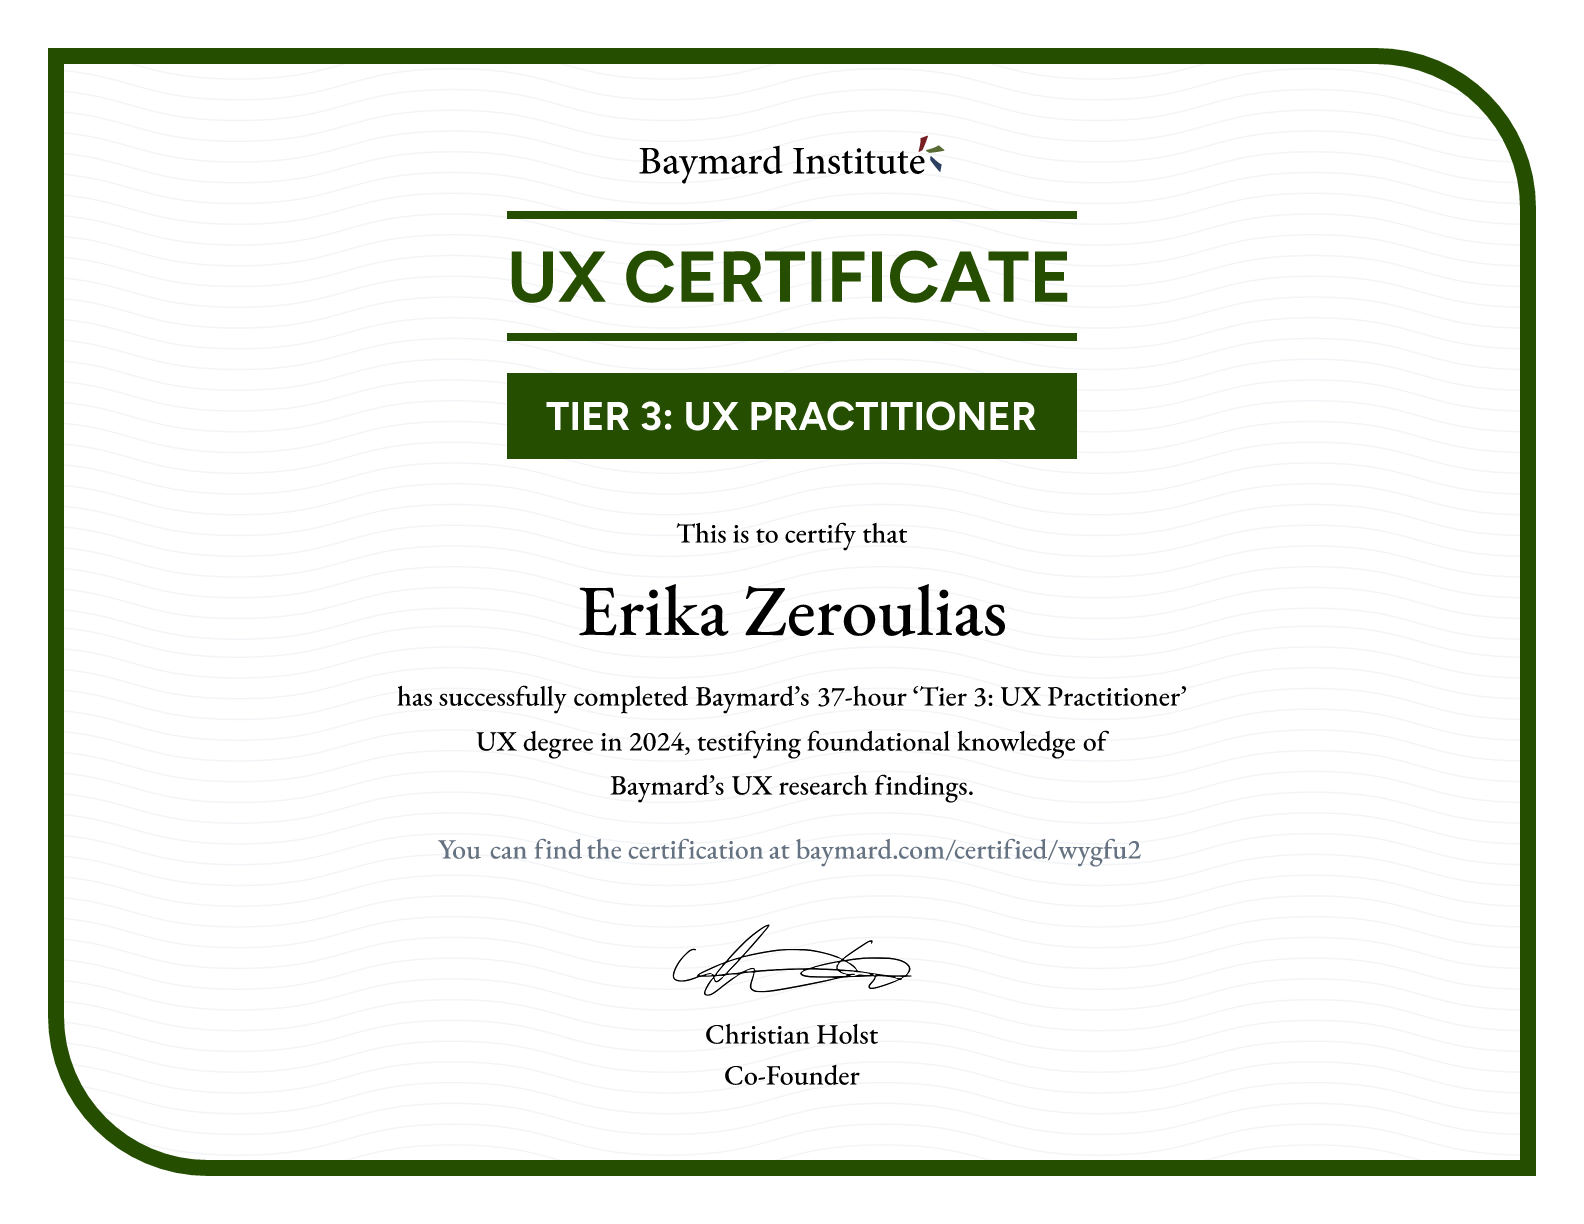 Erika Zeroulias’s certificate